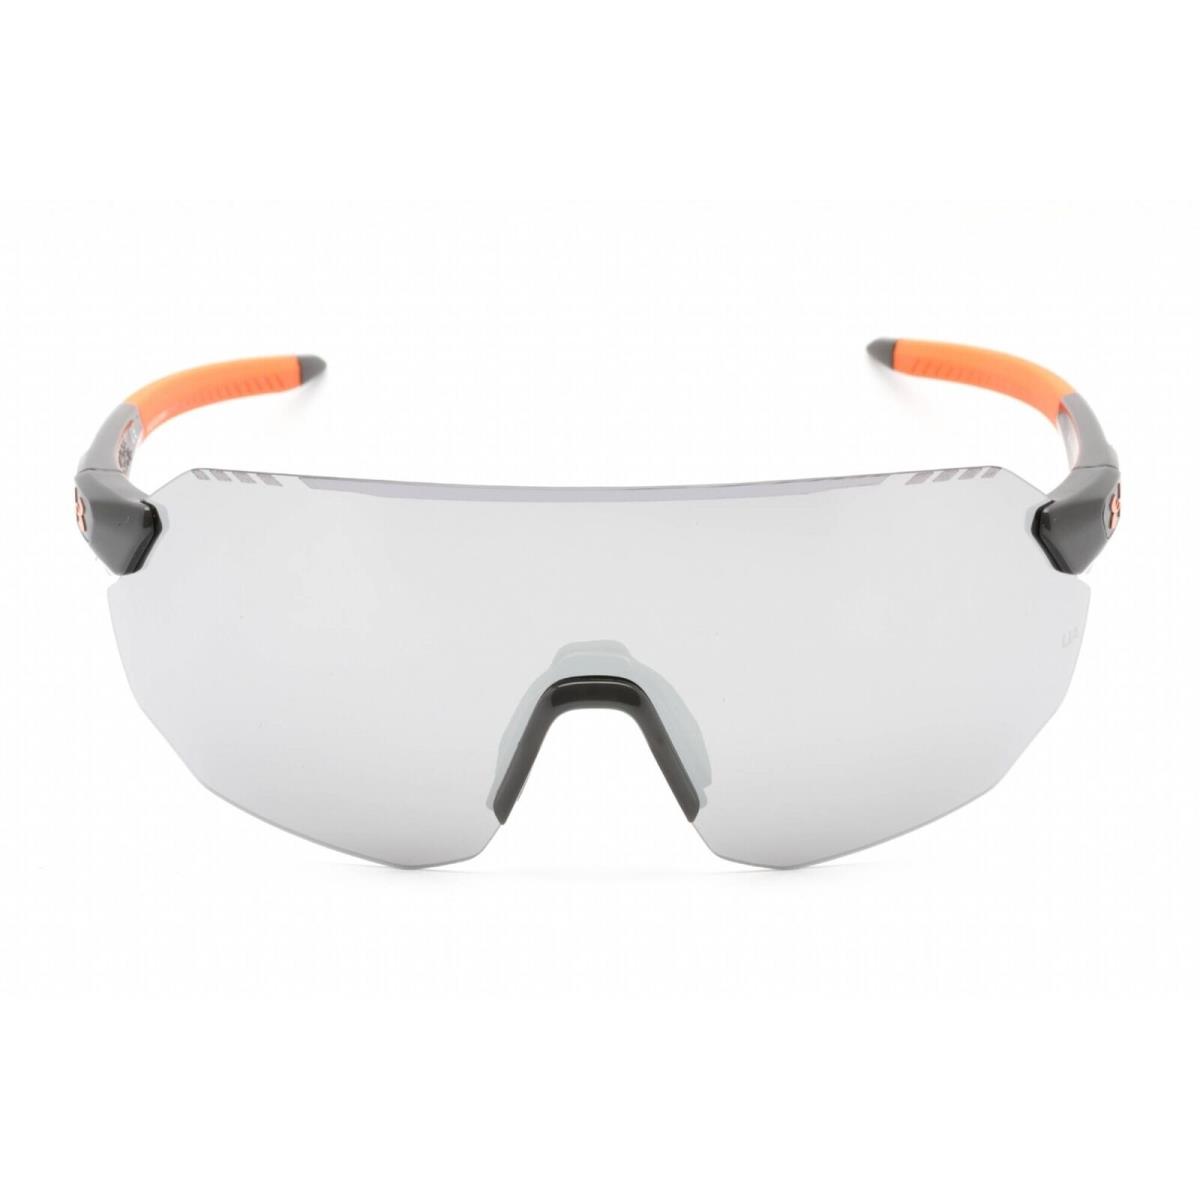 Under Armour Unisex Sunglasses Grey Shield Frame Silver Lens UA Halftime 0KB7 QI